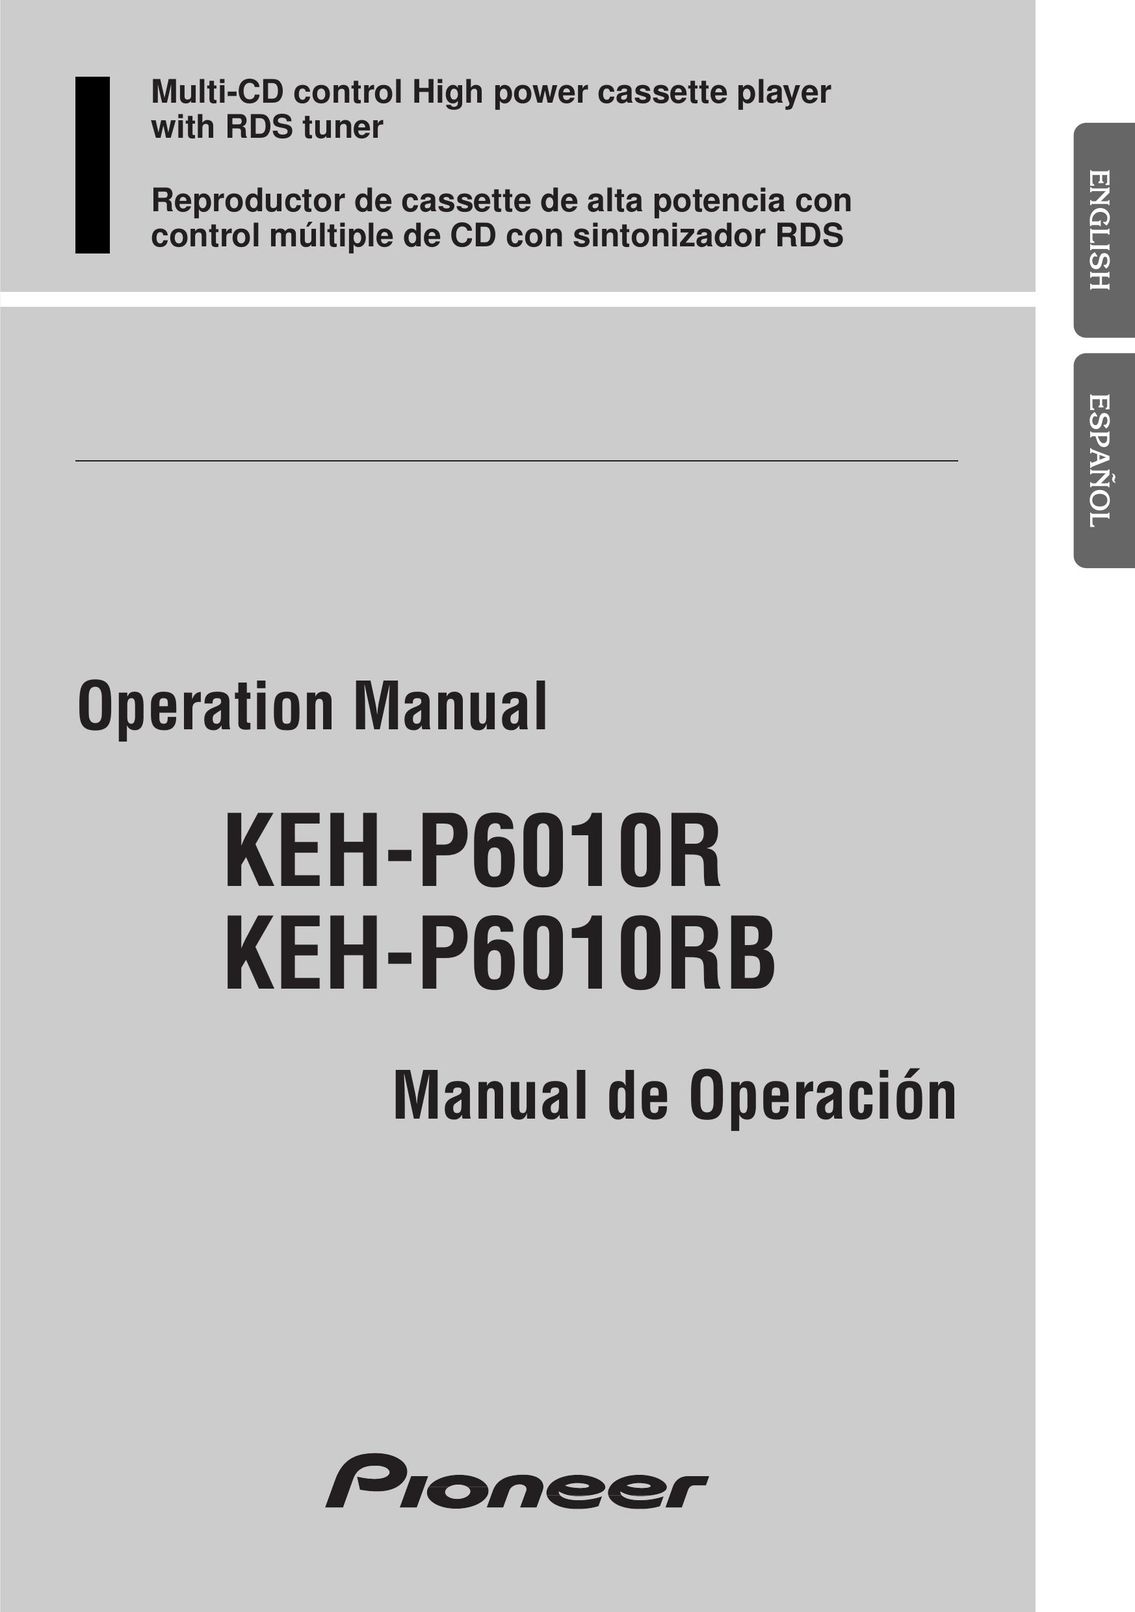 Pioneer KEH-P6010R Cassette Player User Manual